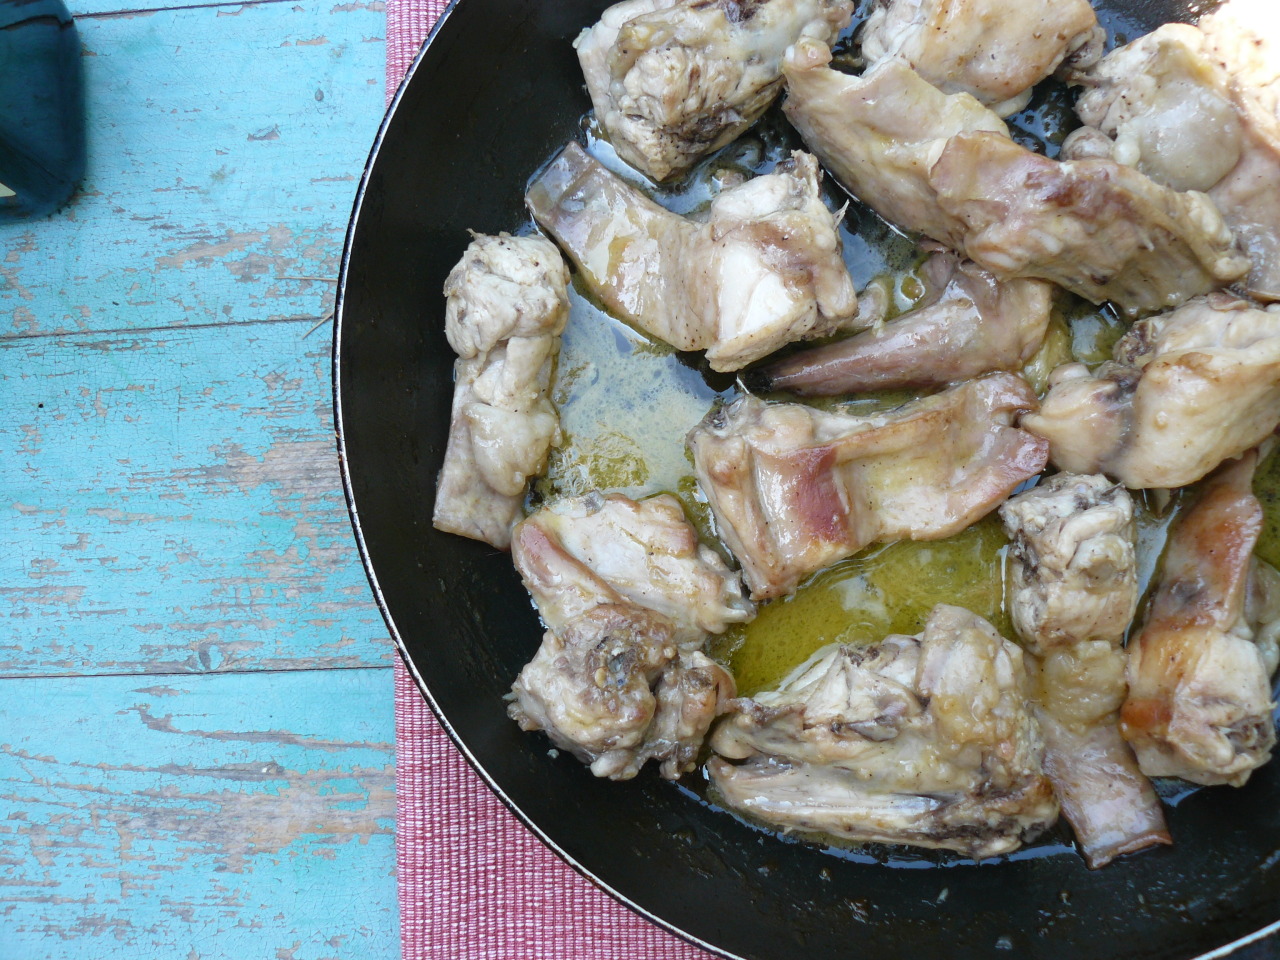 Braised rabbit or chicken, Italian Style - a recipe!